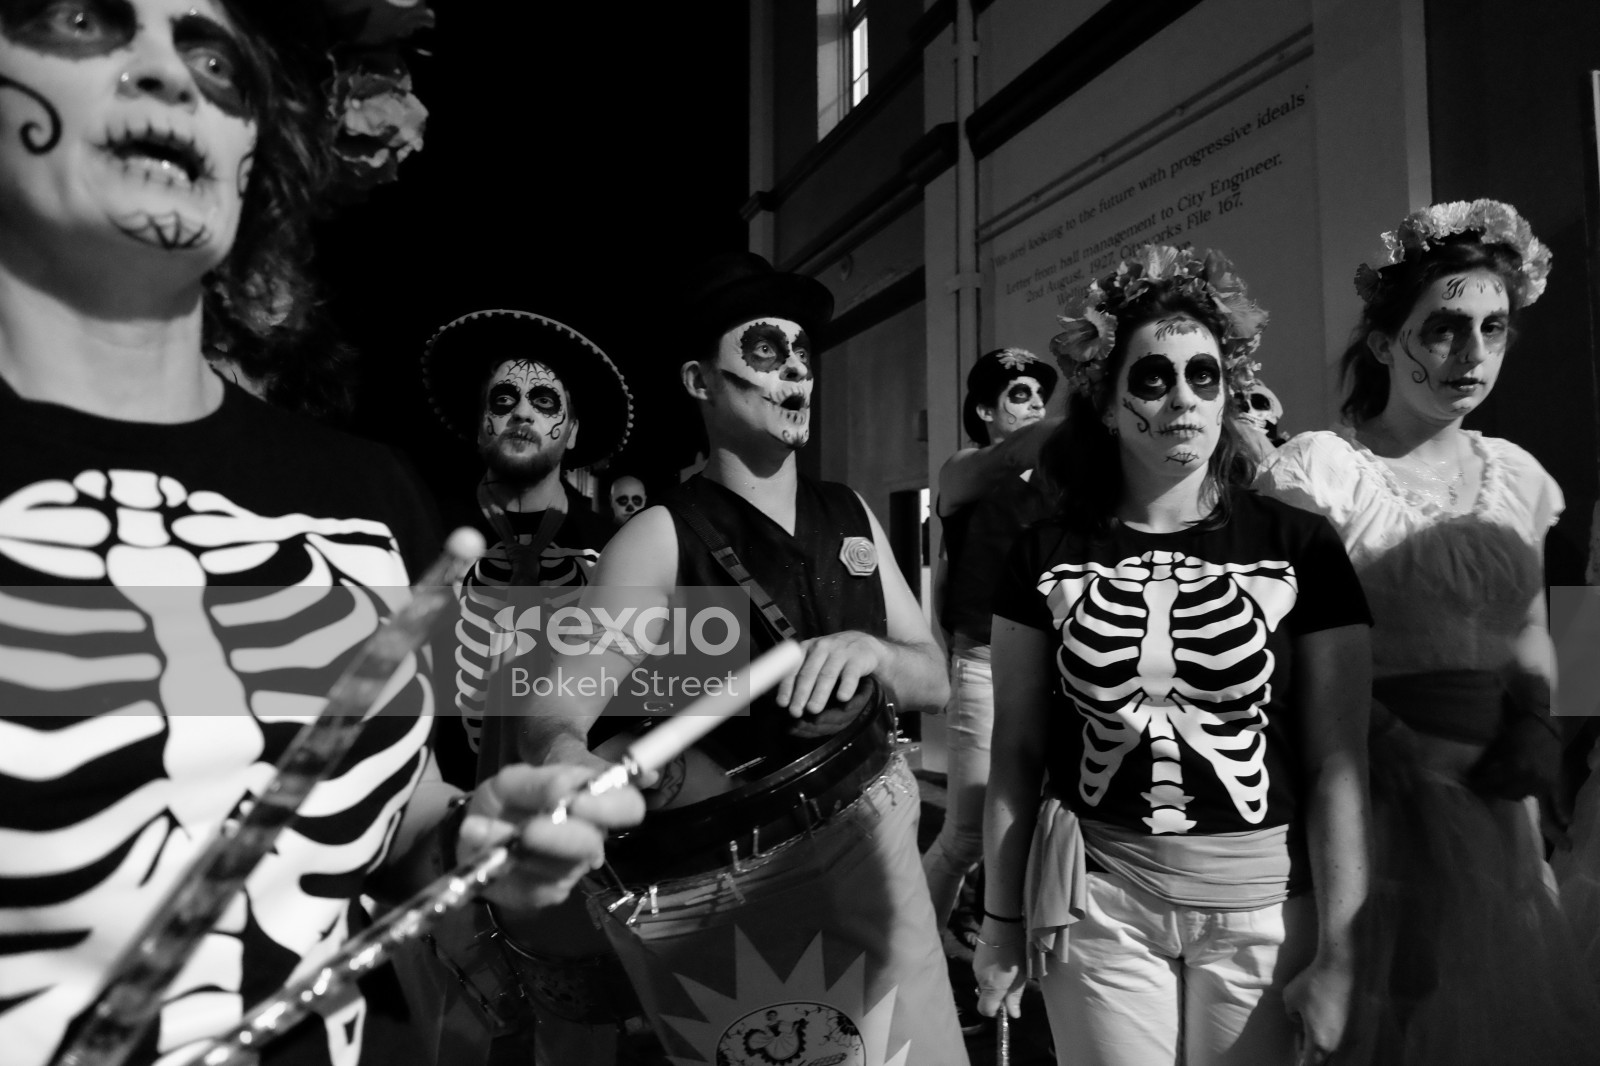 Cuba Dupa Skeleton costumes